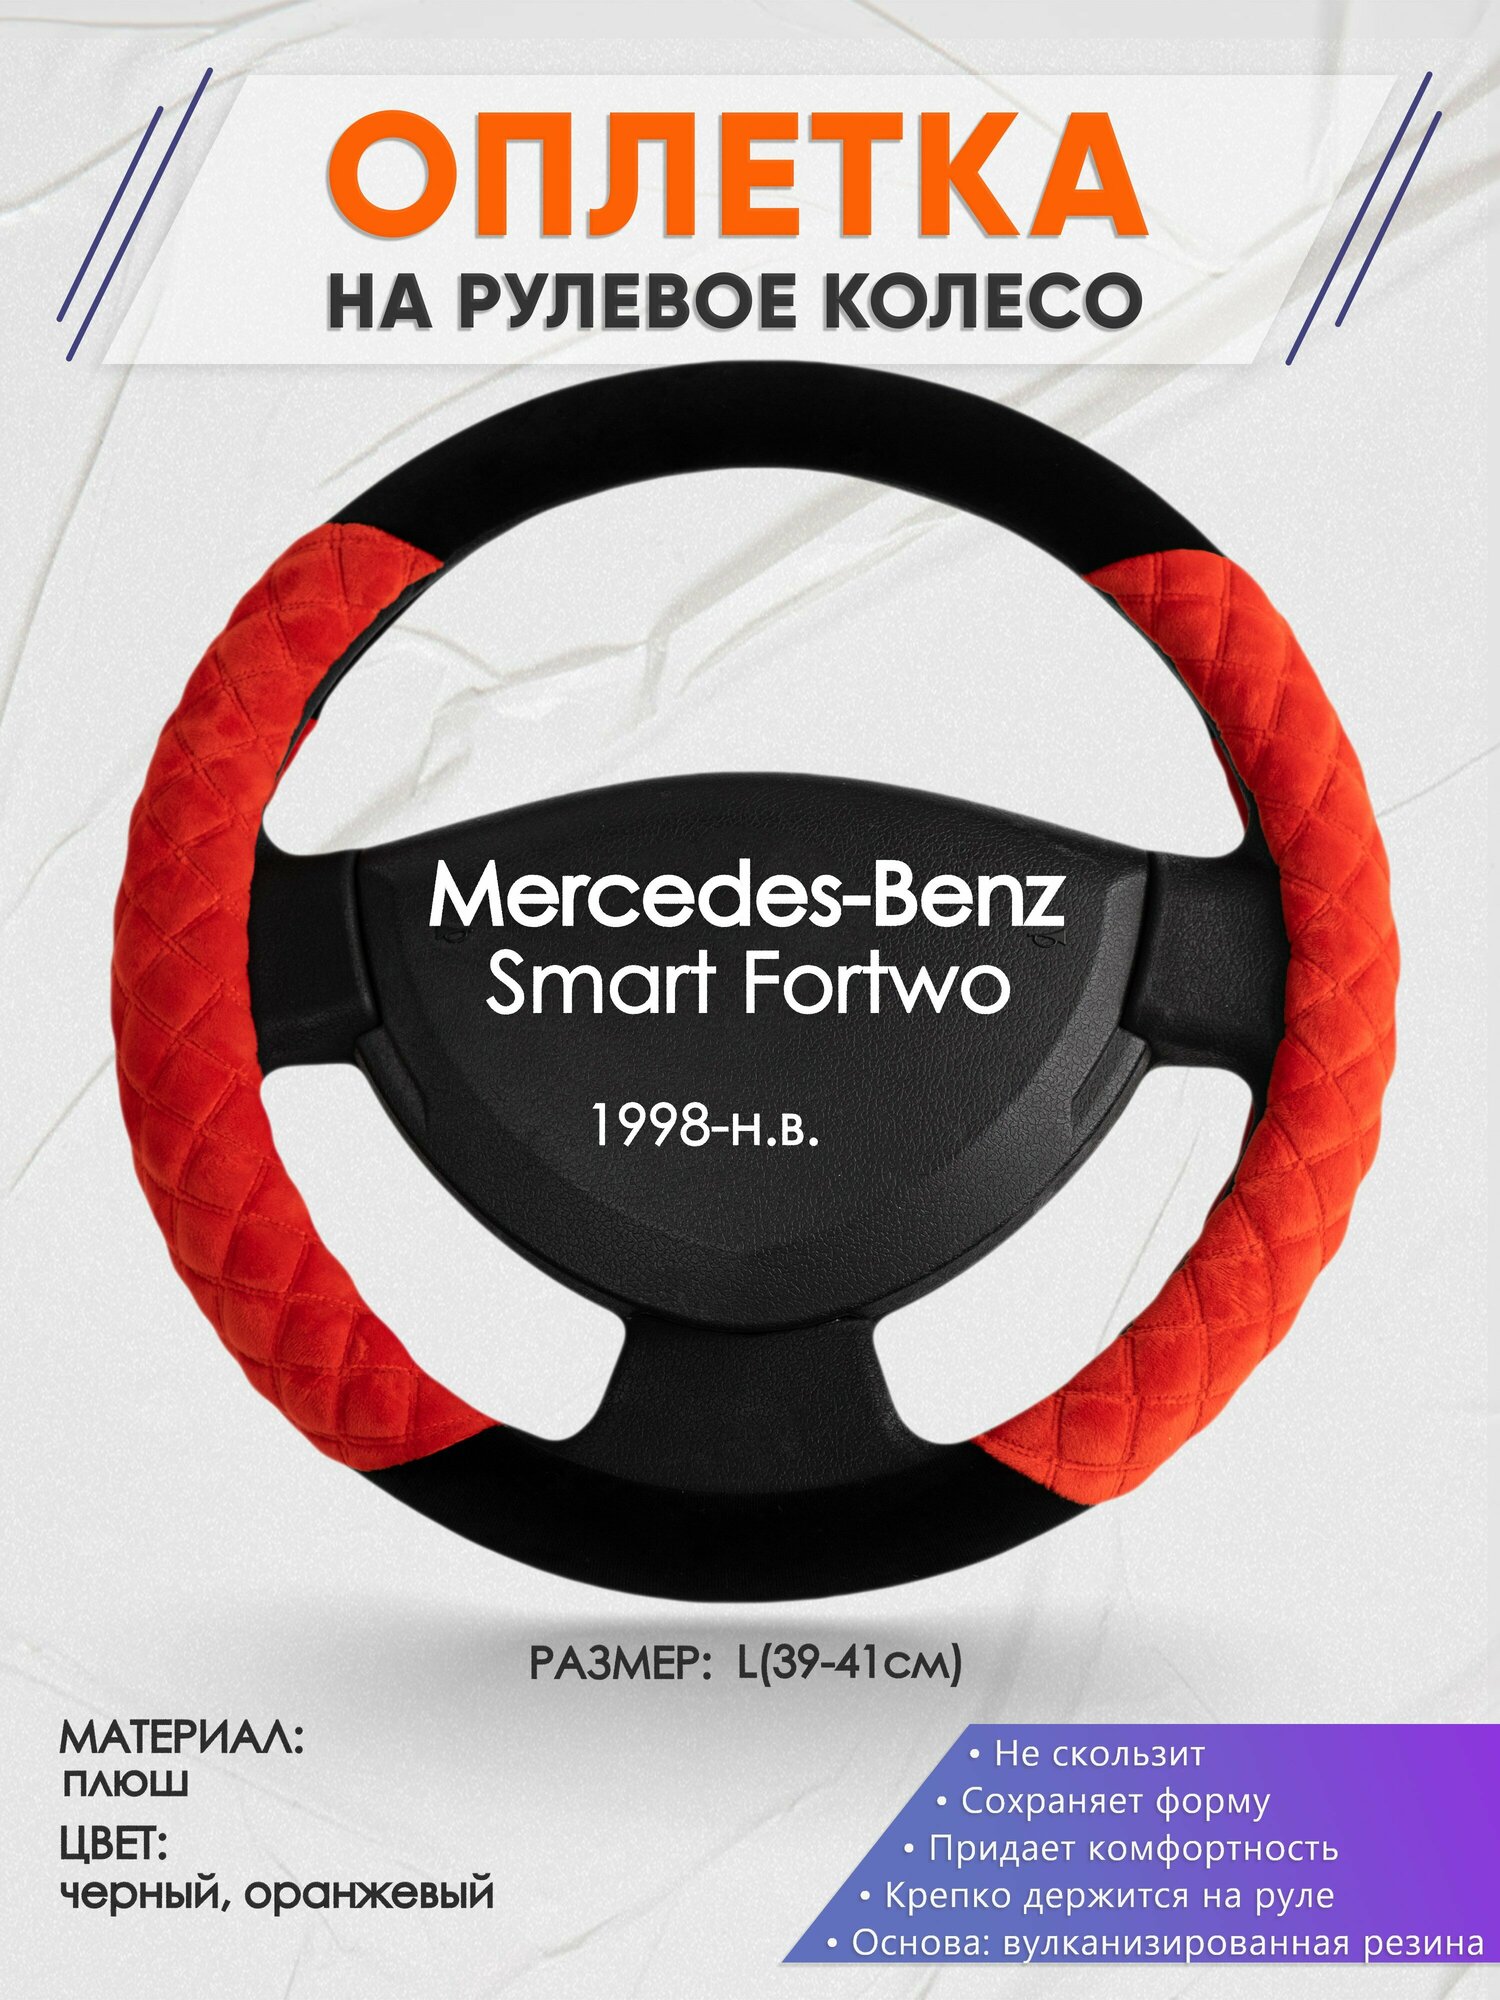 Оплетка на руль для Mercedes-Benz Smart Fortwo(Мерседес Бенц Смарт Форту) 1998-н. в, L(39-41см), Замша 37